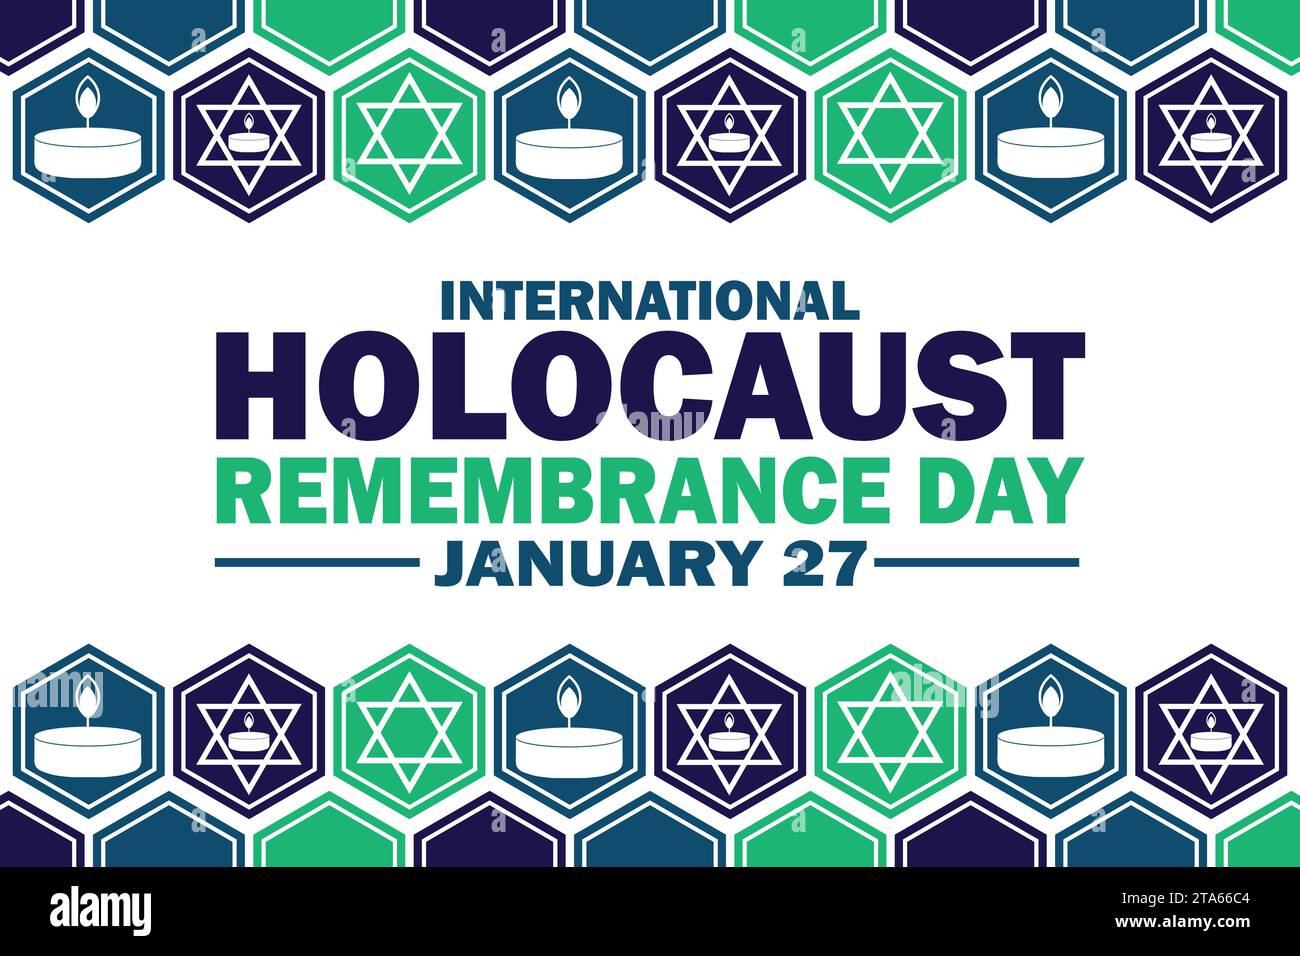 Internationaler Holocaust-Gedenktag .Vektor-Illustration. Januar 27. Hintergrund für Poster, Banner, Grußkarte. Stock Vektor